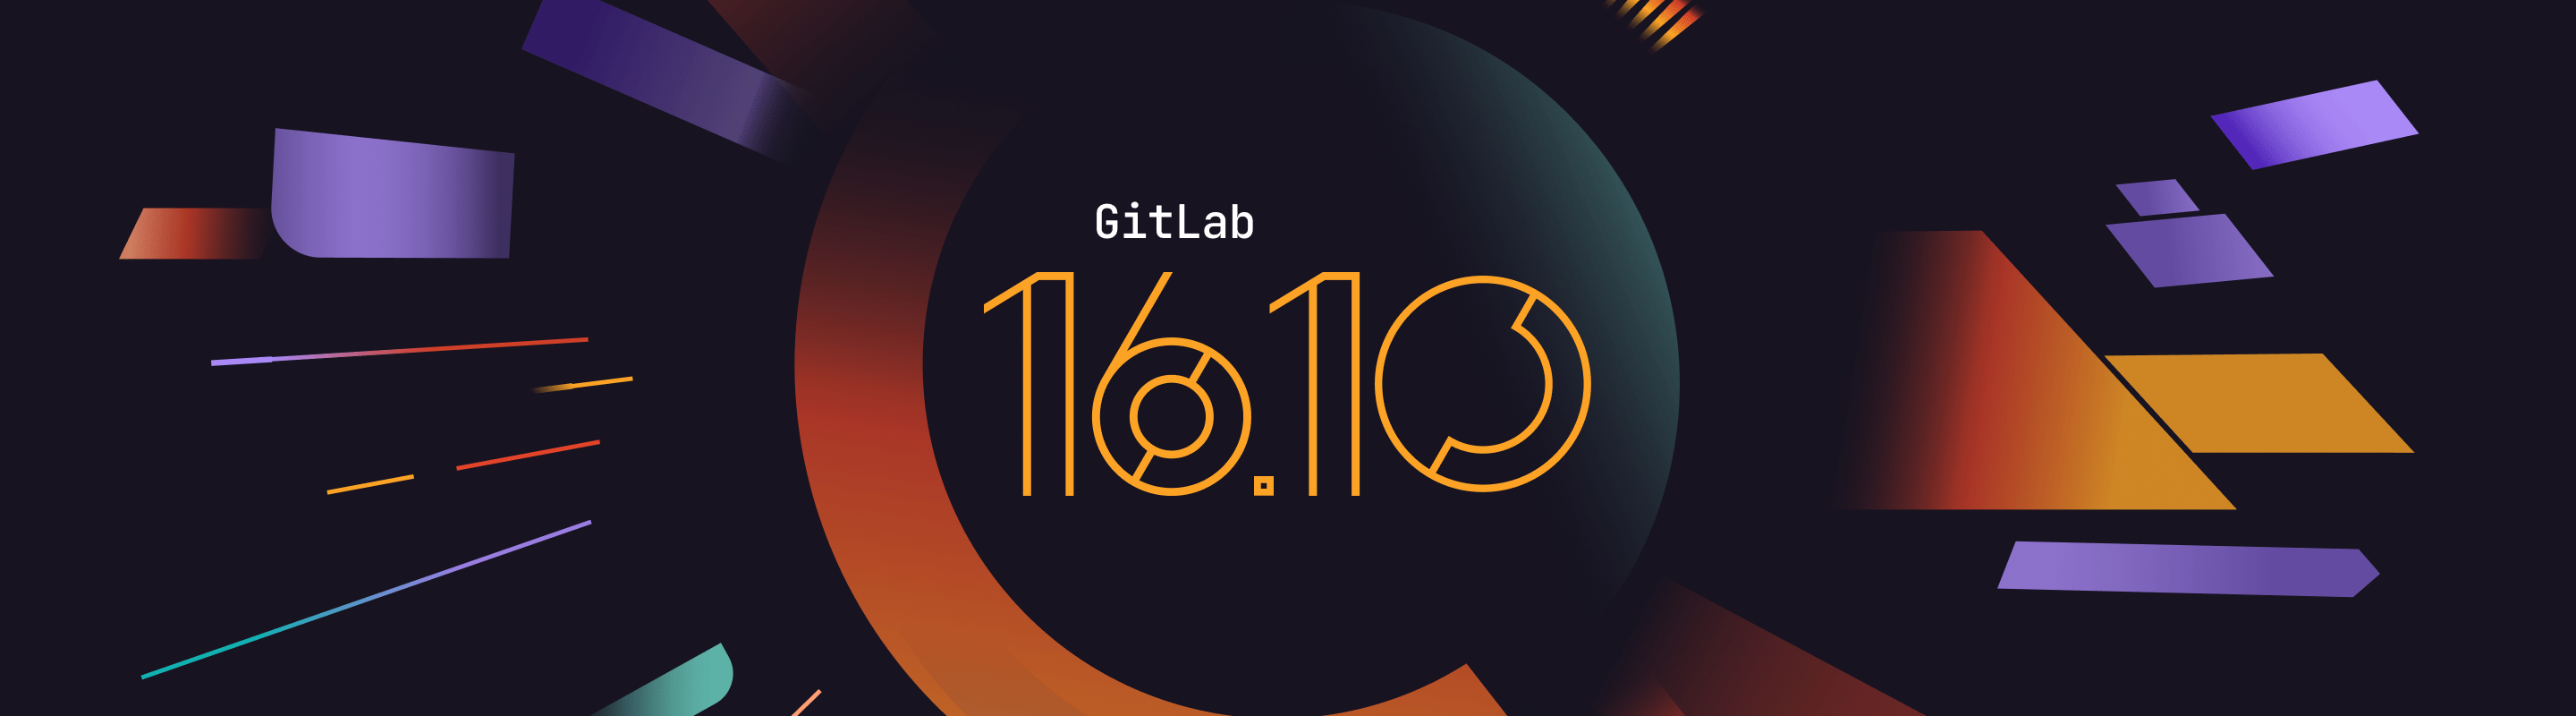 GitLab 16.9